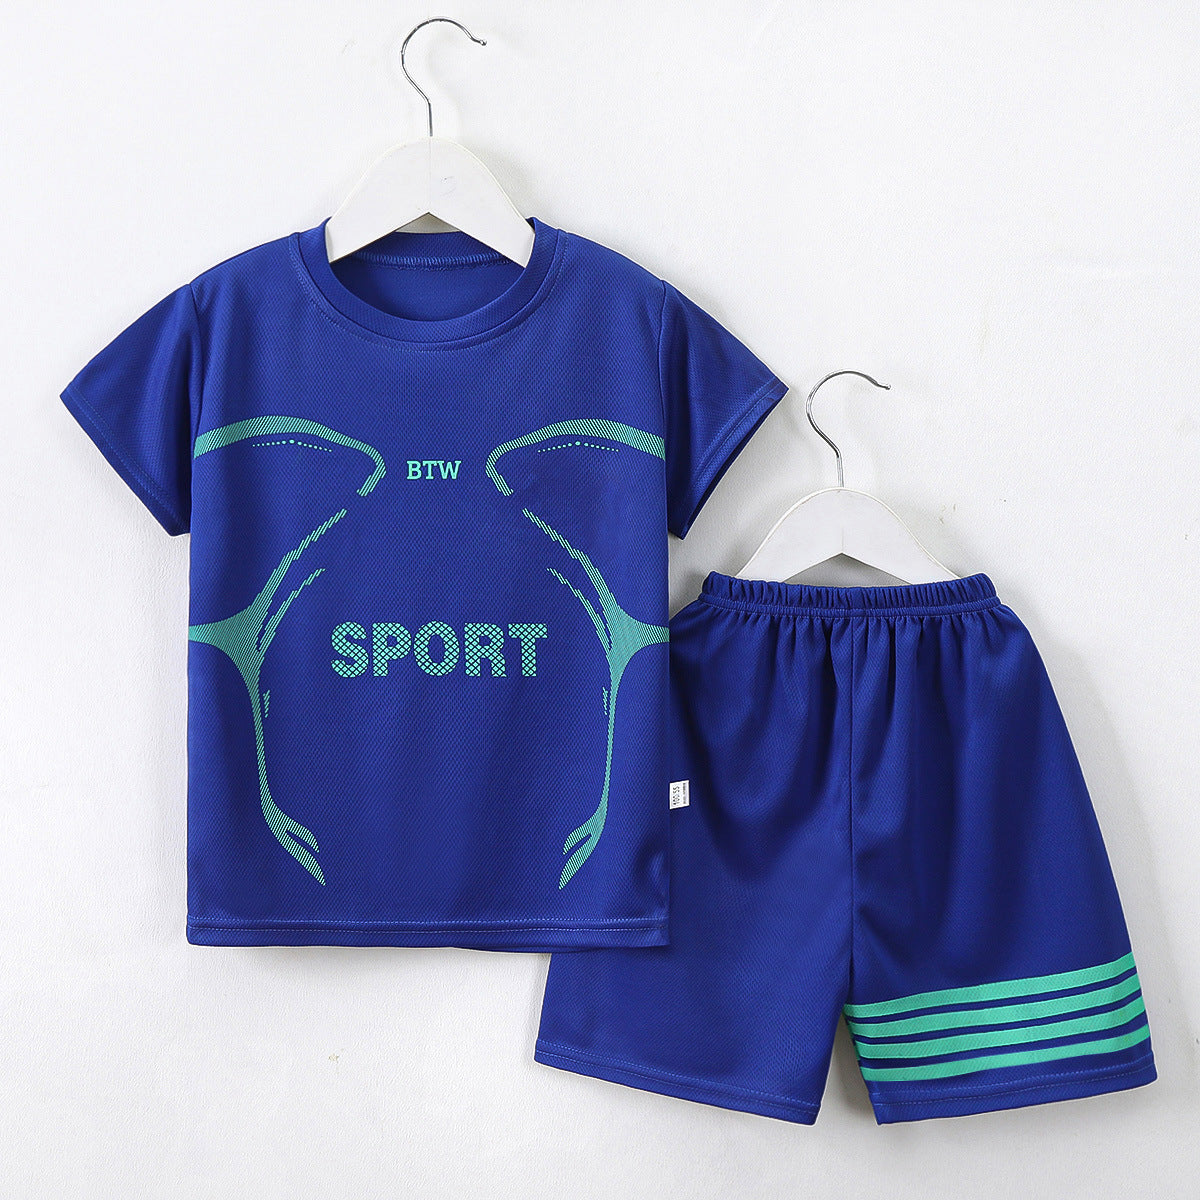 [351274] - Setelan Baju Harian Santai Import Anak Laki-Laki - Motif Line Sports